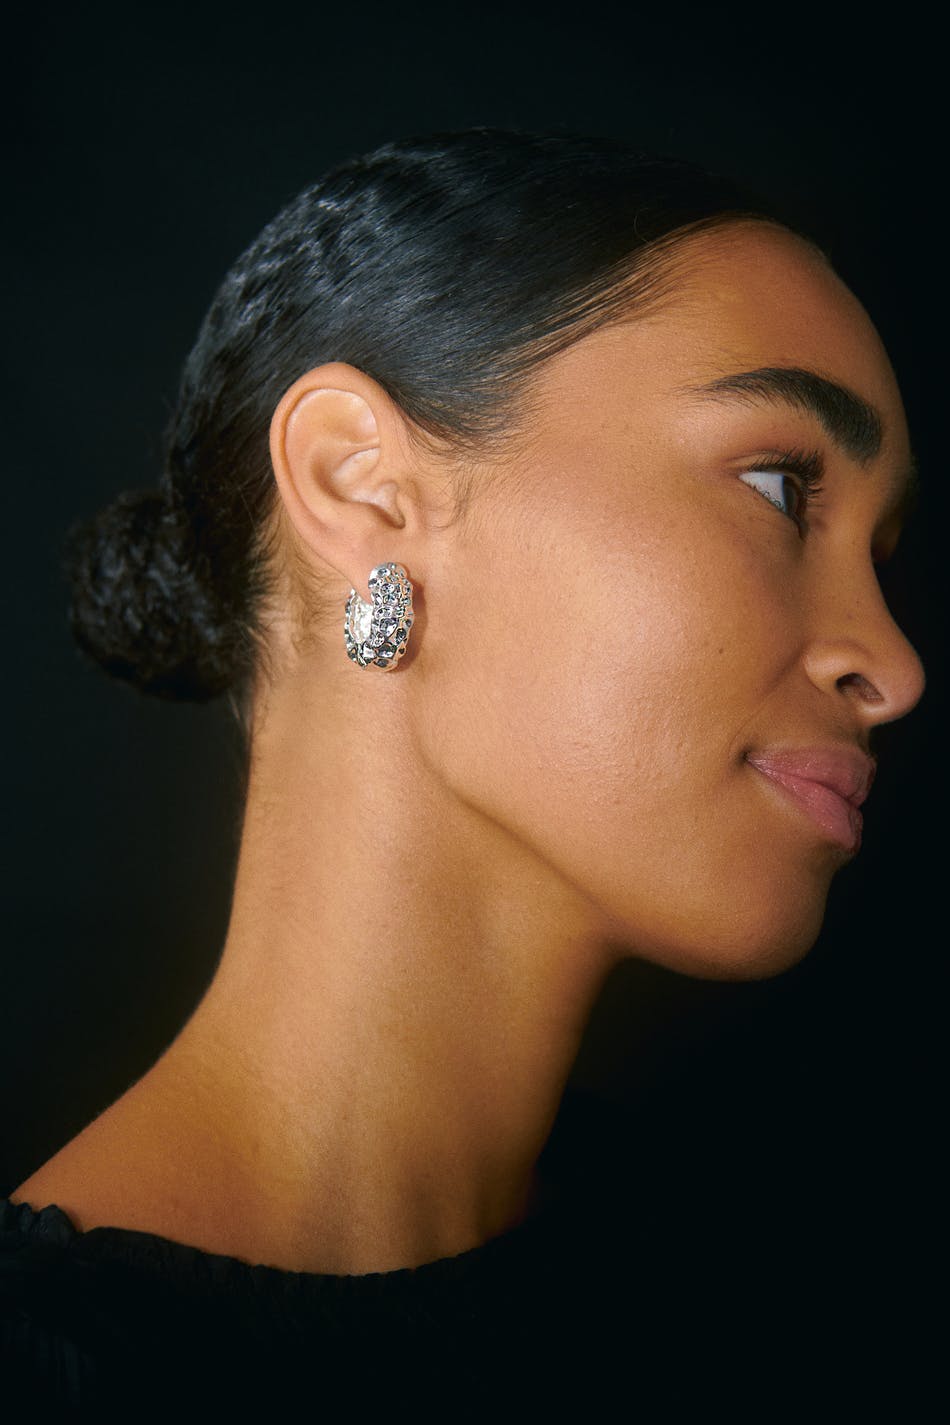 Gina Tricot - Crinkled silver hoops earrings - örhängen - Silver - ONESIZE - Female